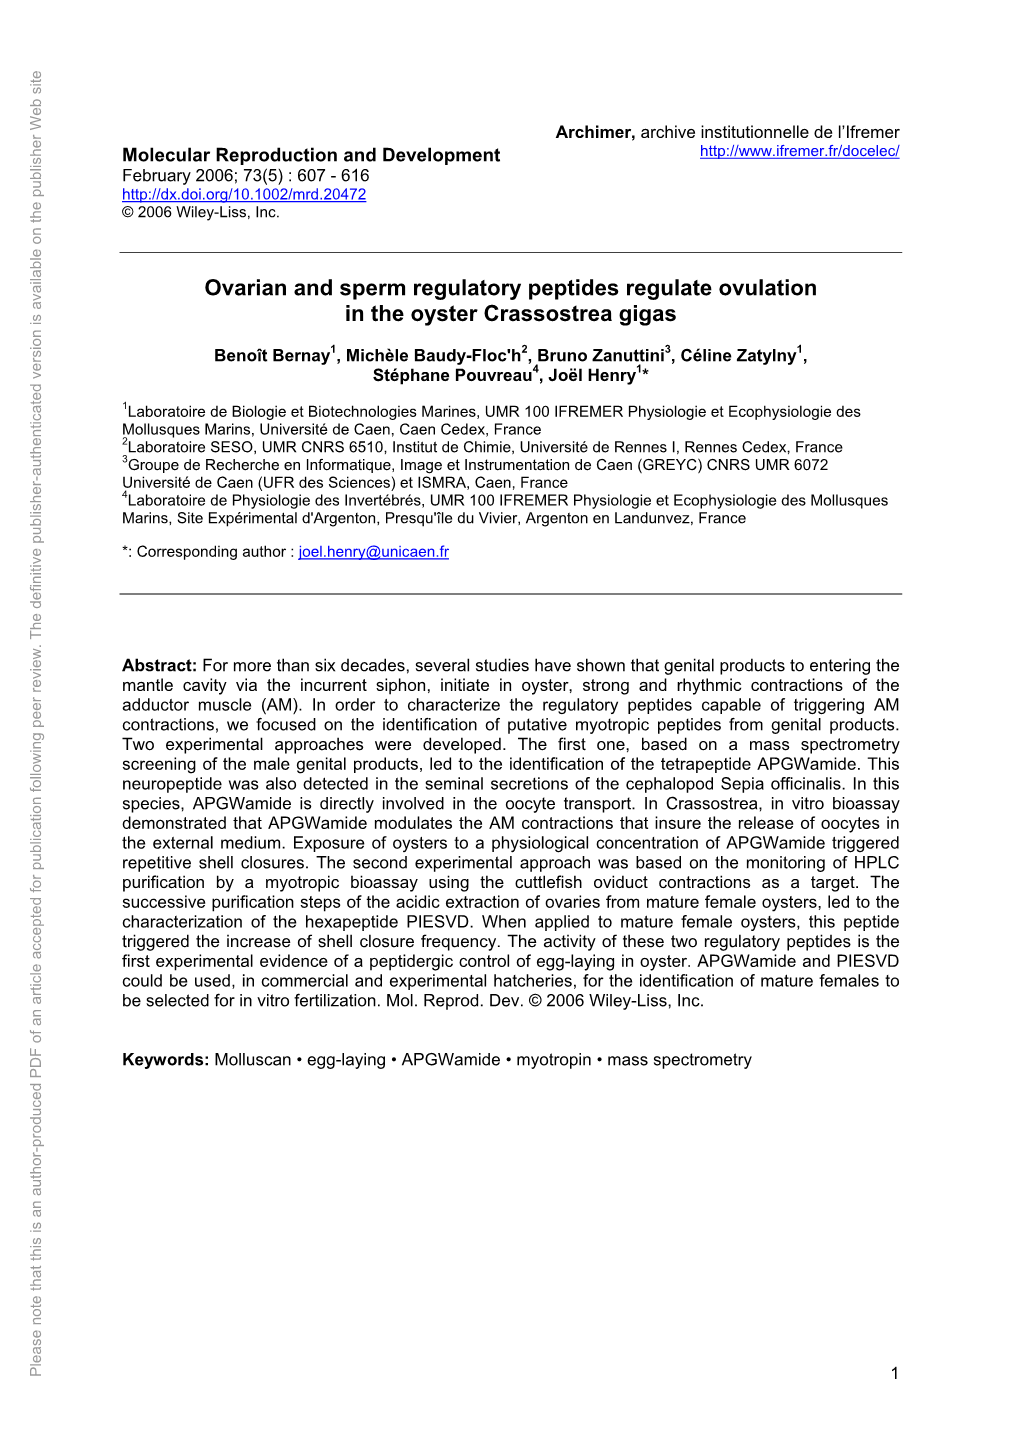 Ovarian and Sperm Regulatory Peptides Regulate